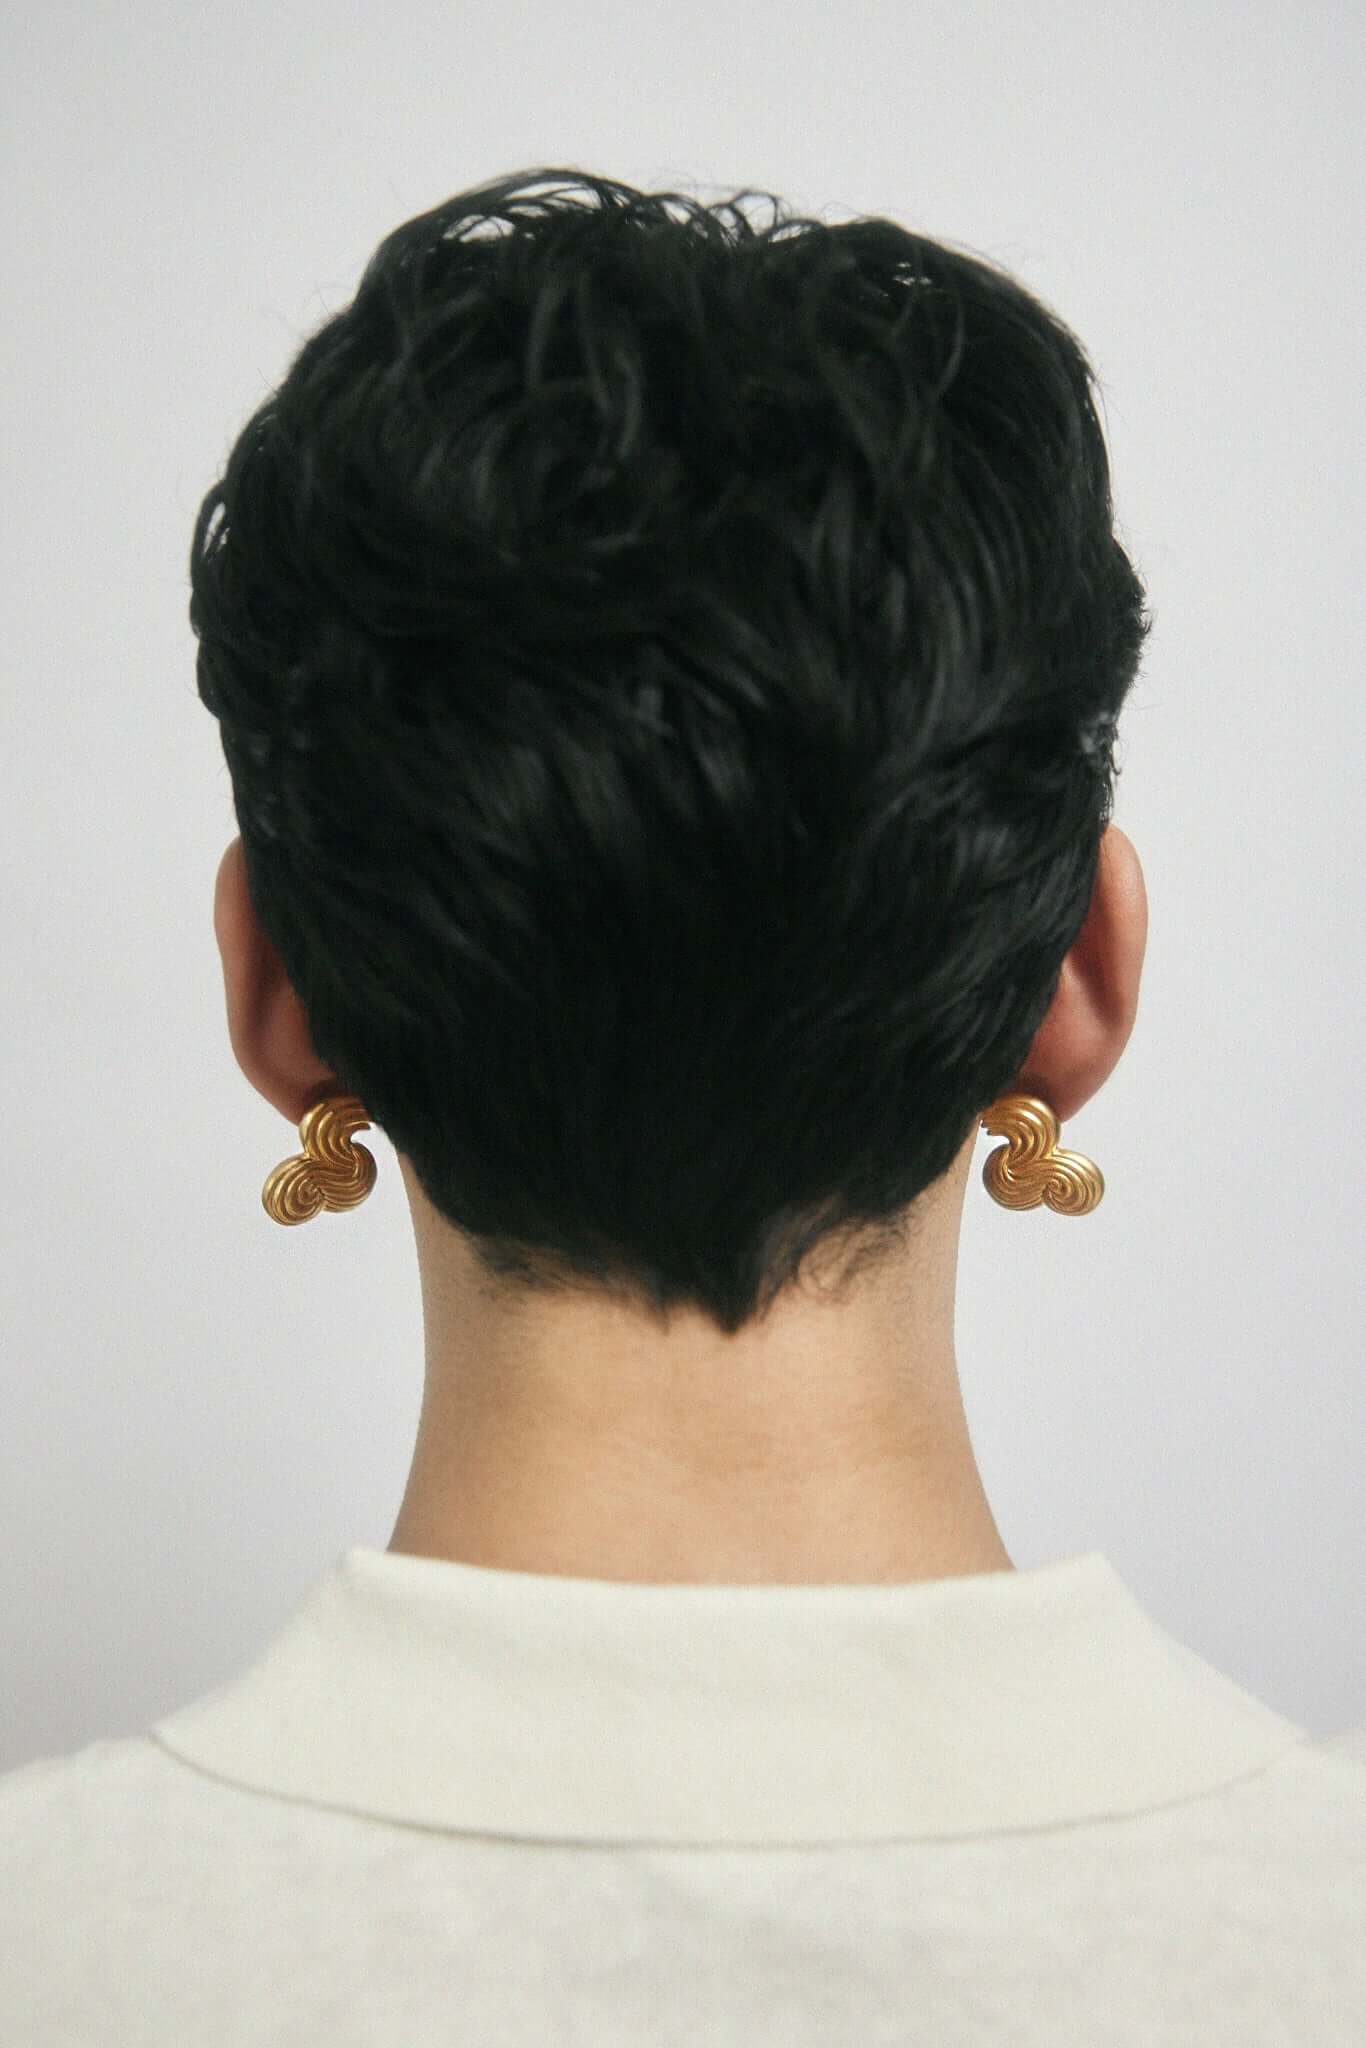 Backside of a mans head, wearing large gold earrings